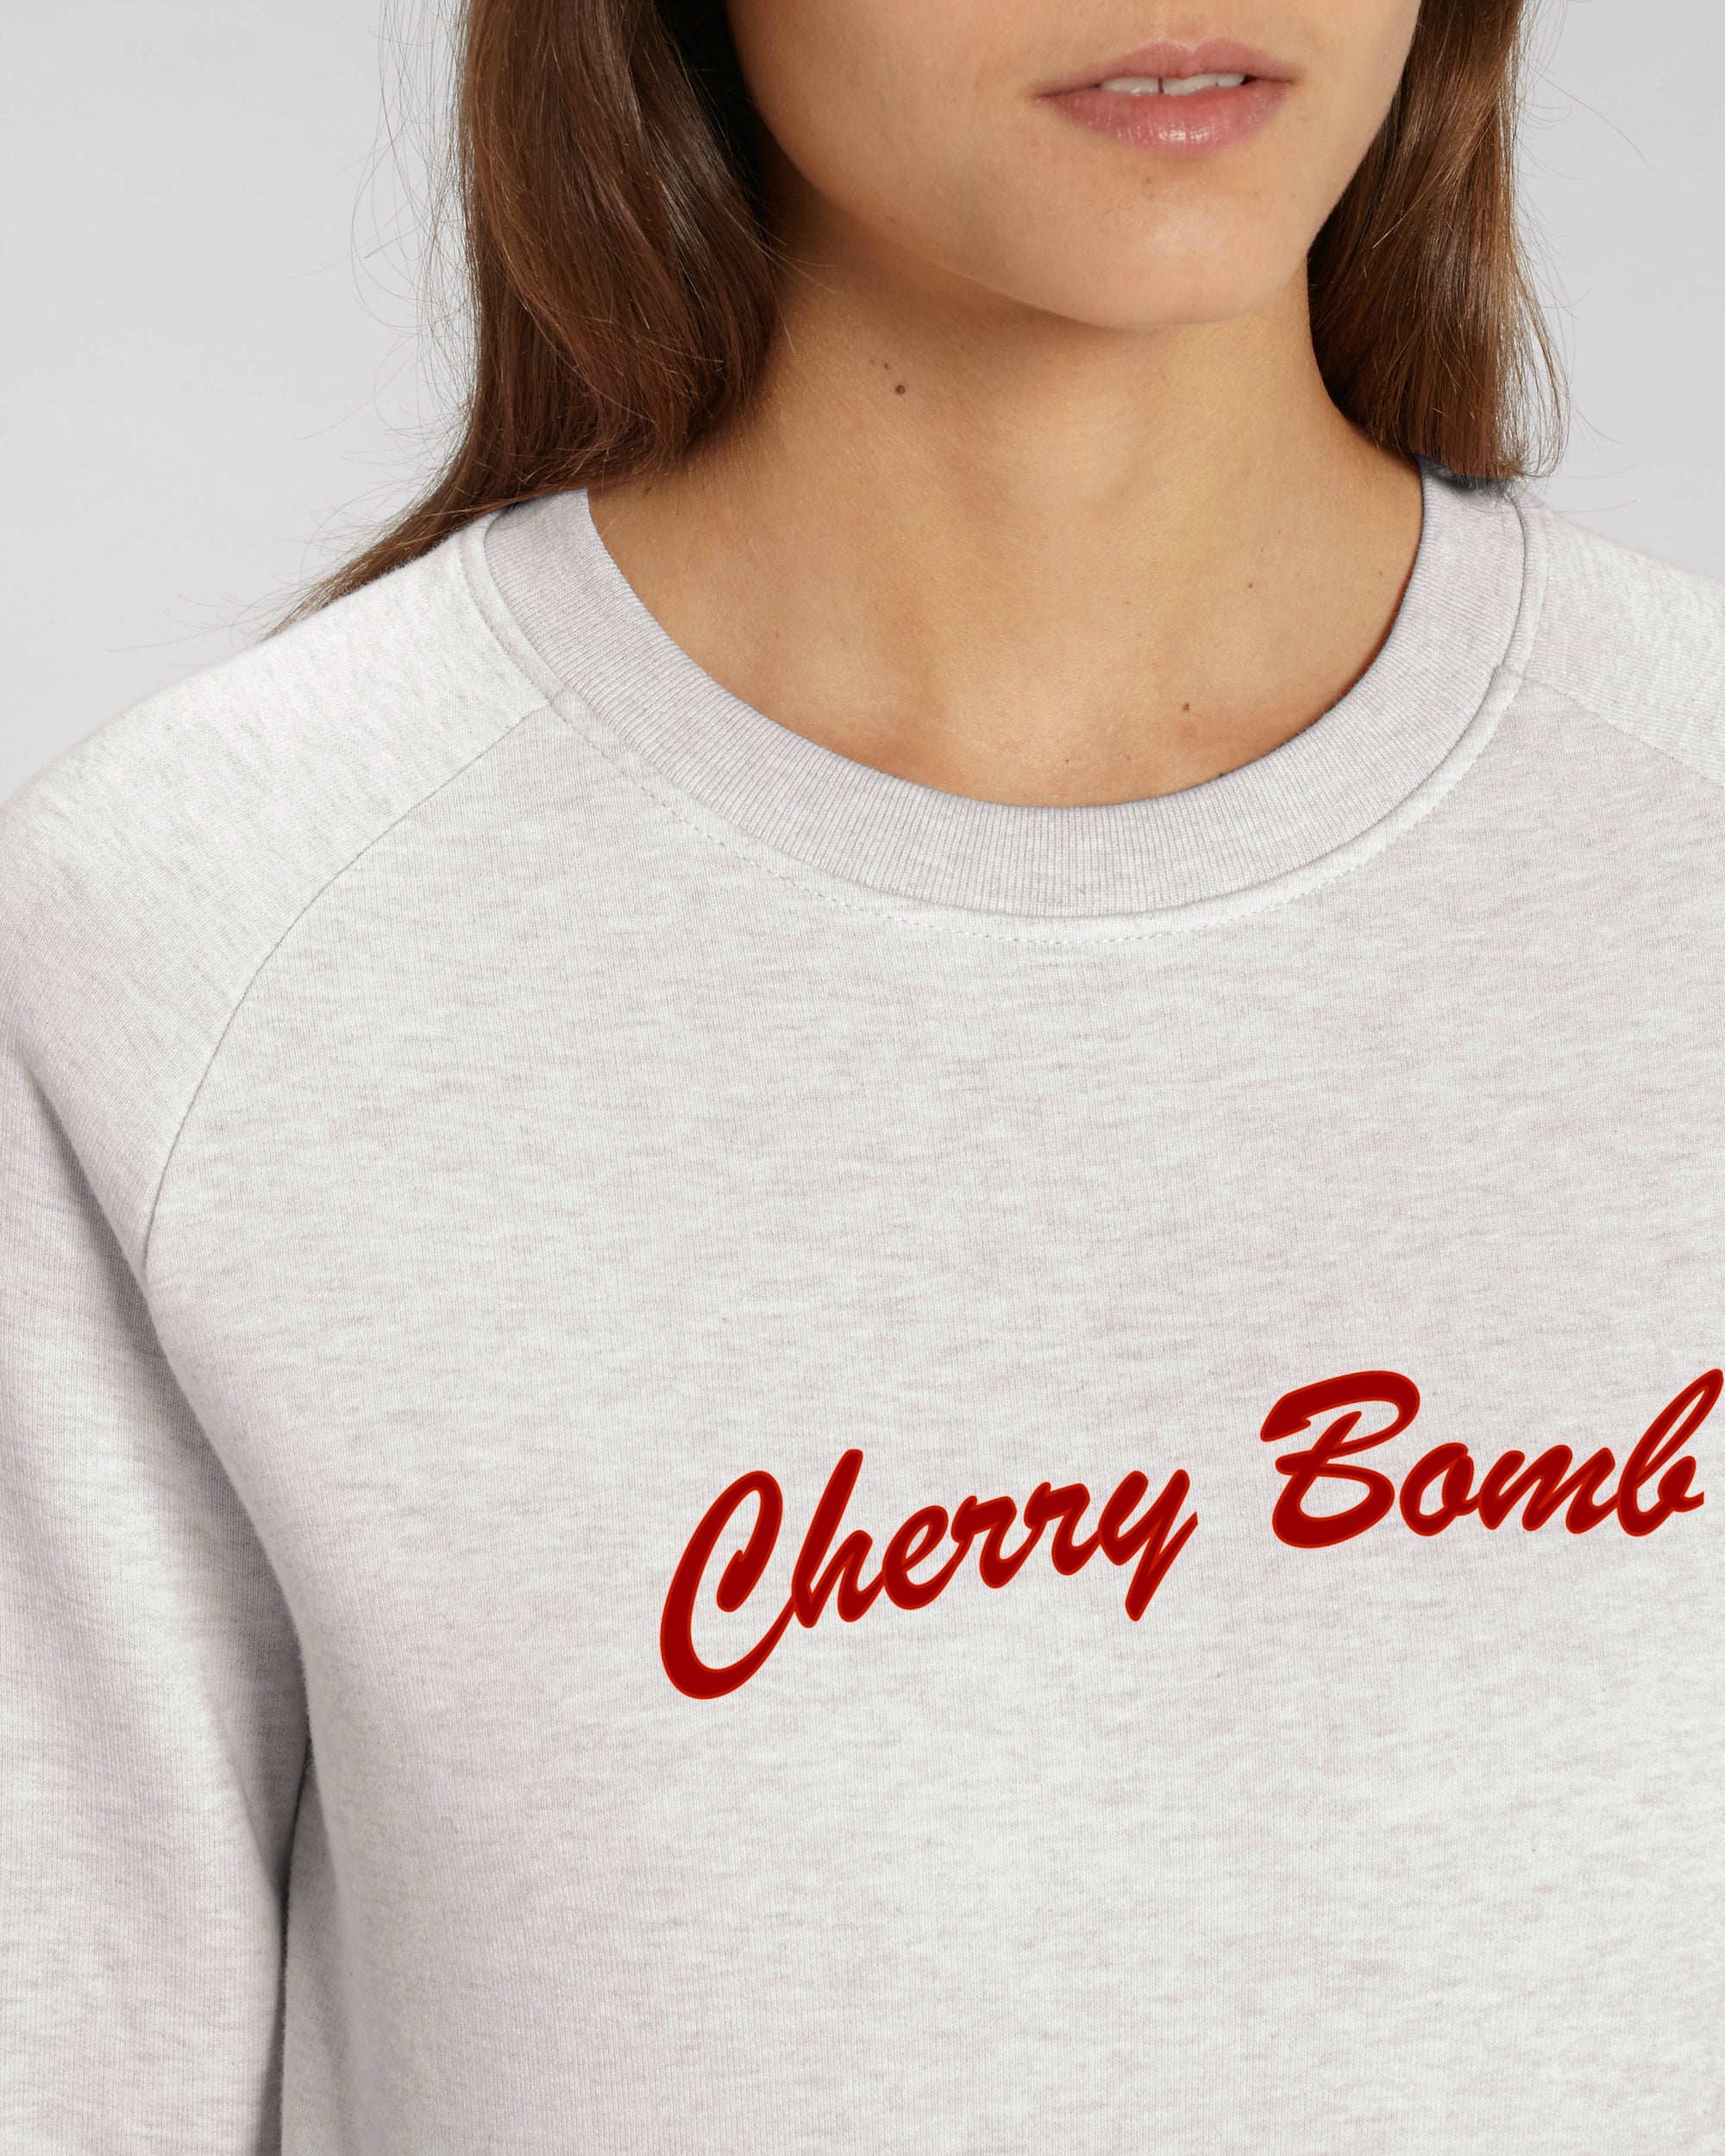 'CHERRY BOMB' EMBROIDERED WOMEN'S ORGANIC COTTON SWEATSHIRT